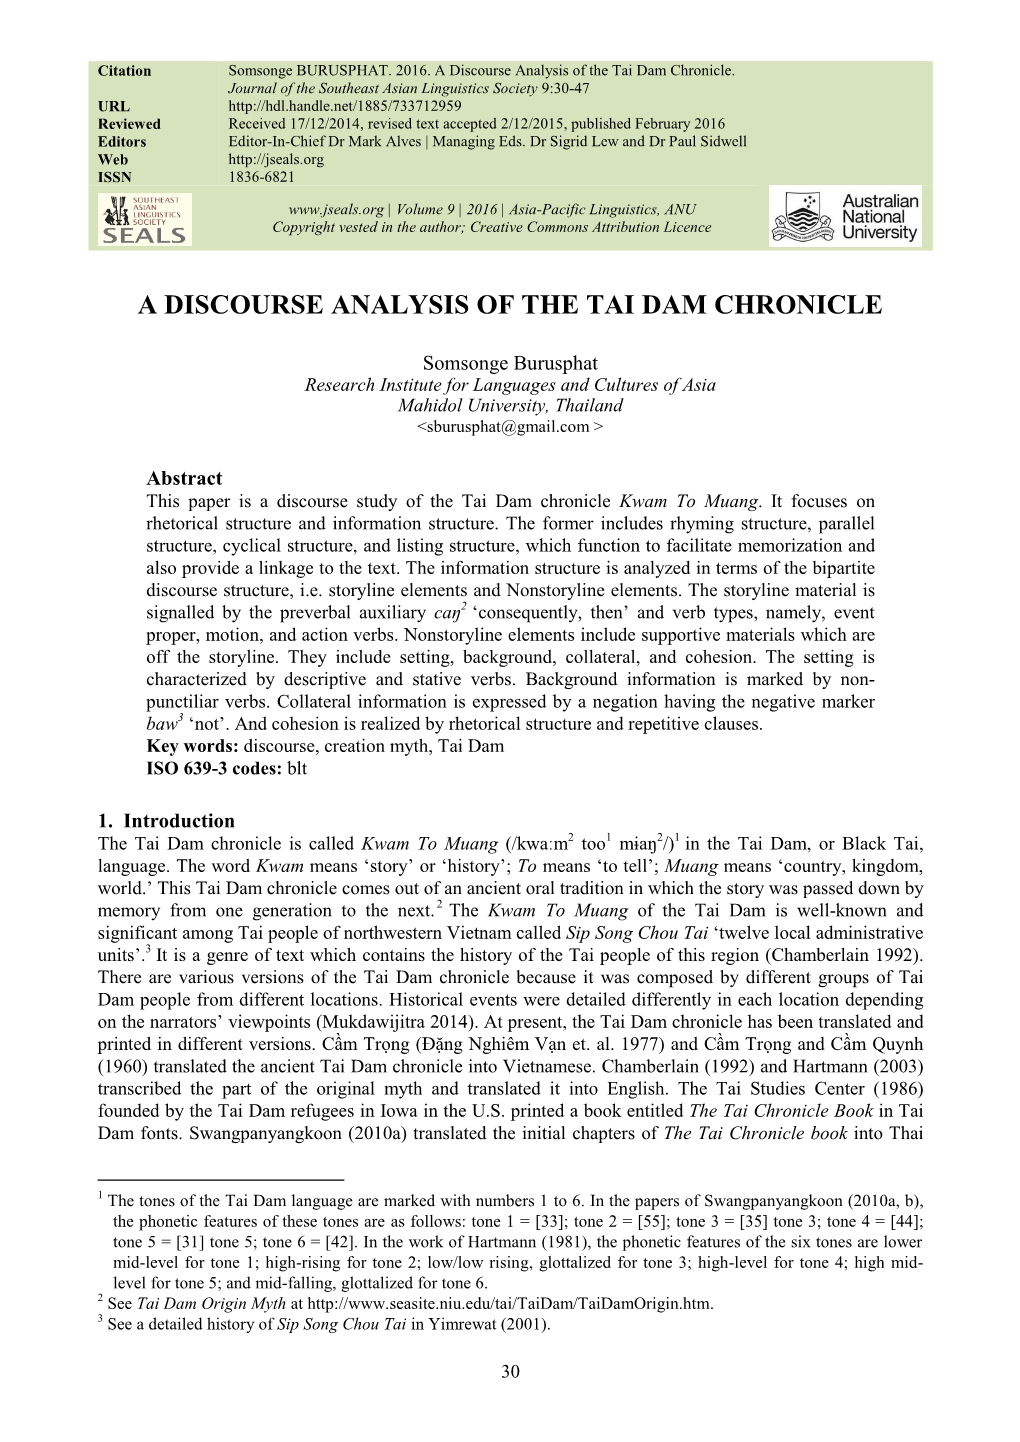 A Discourse Analysis of the Tai Dam Chronicle